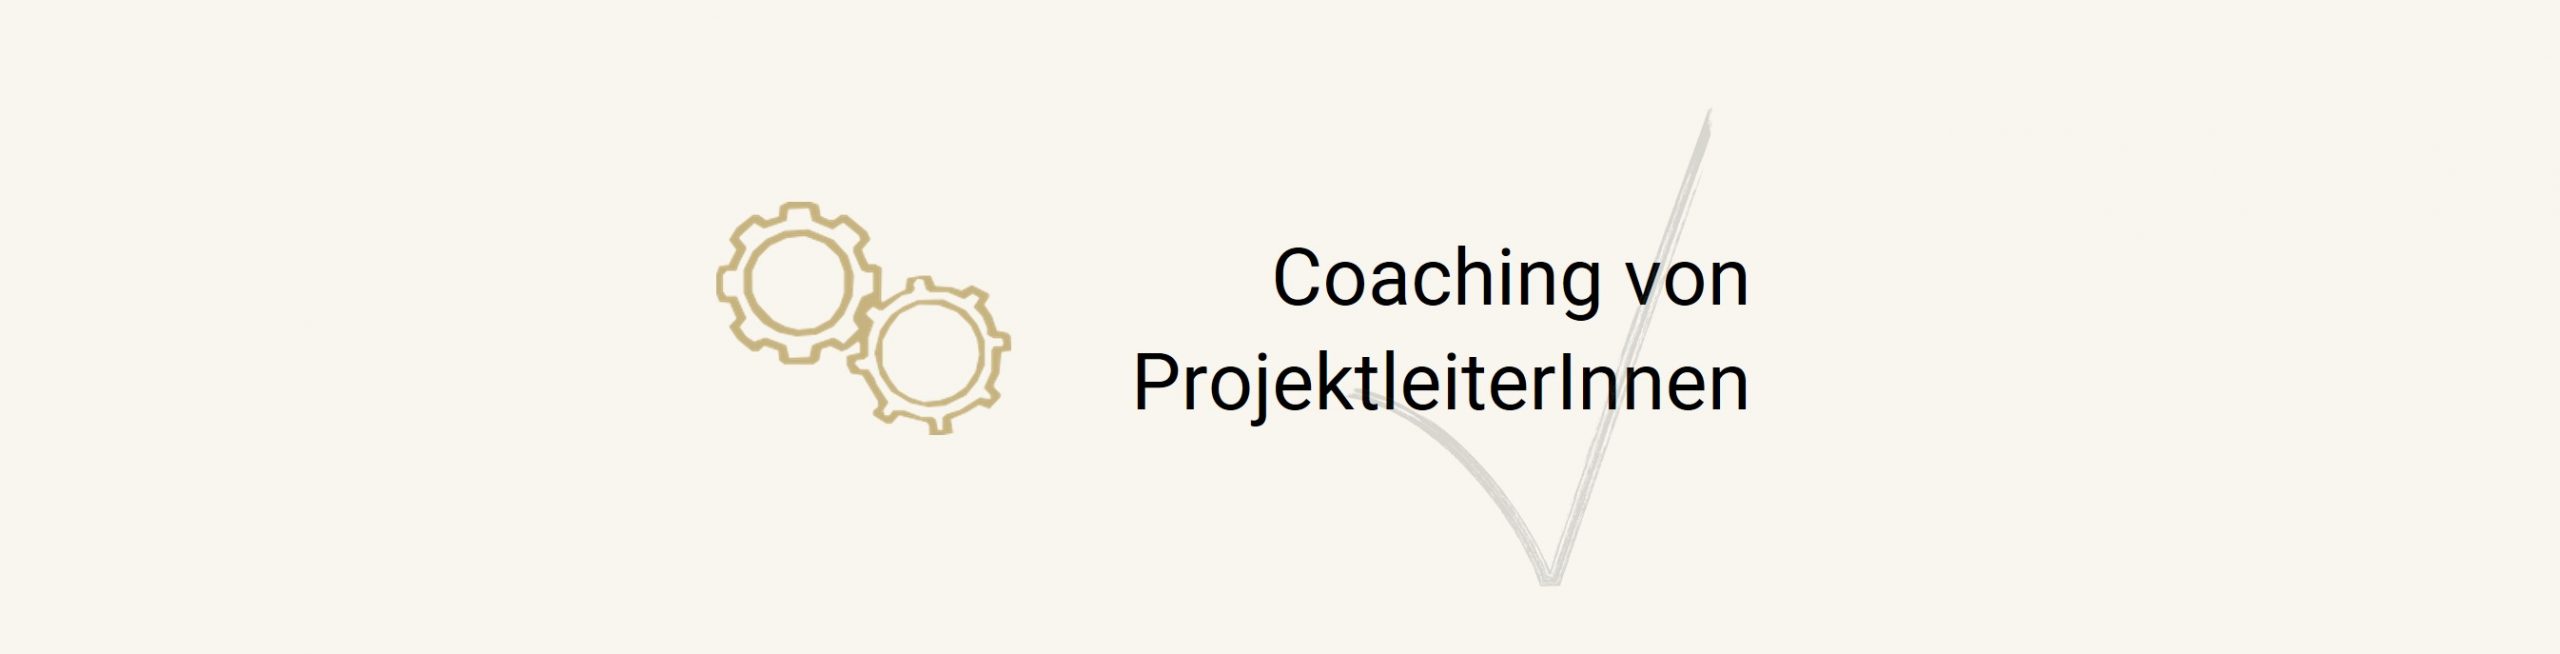 Banner_Coaching